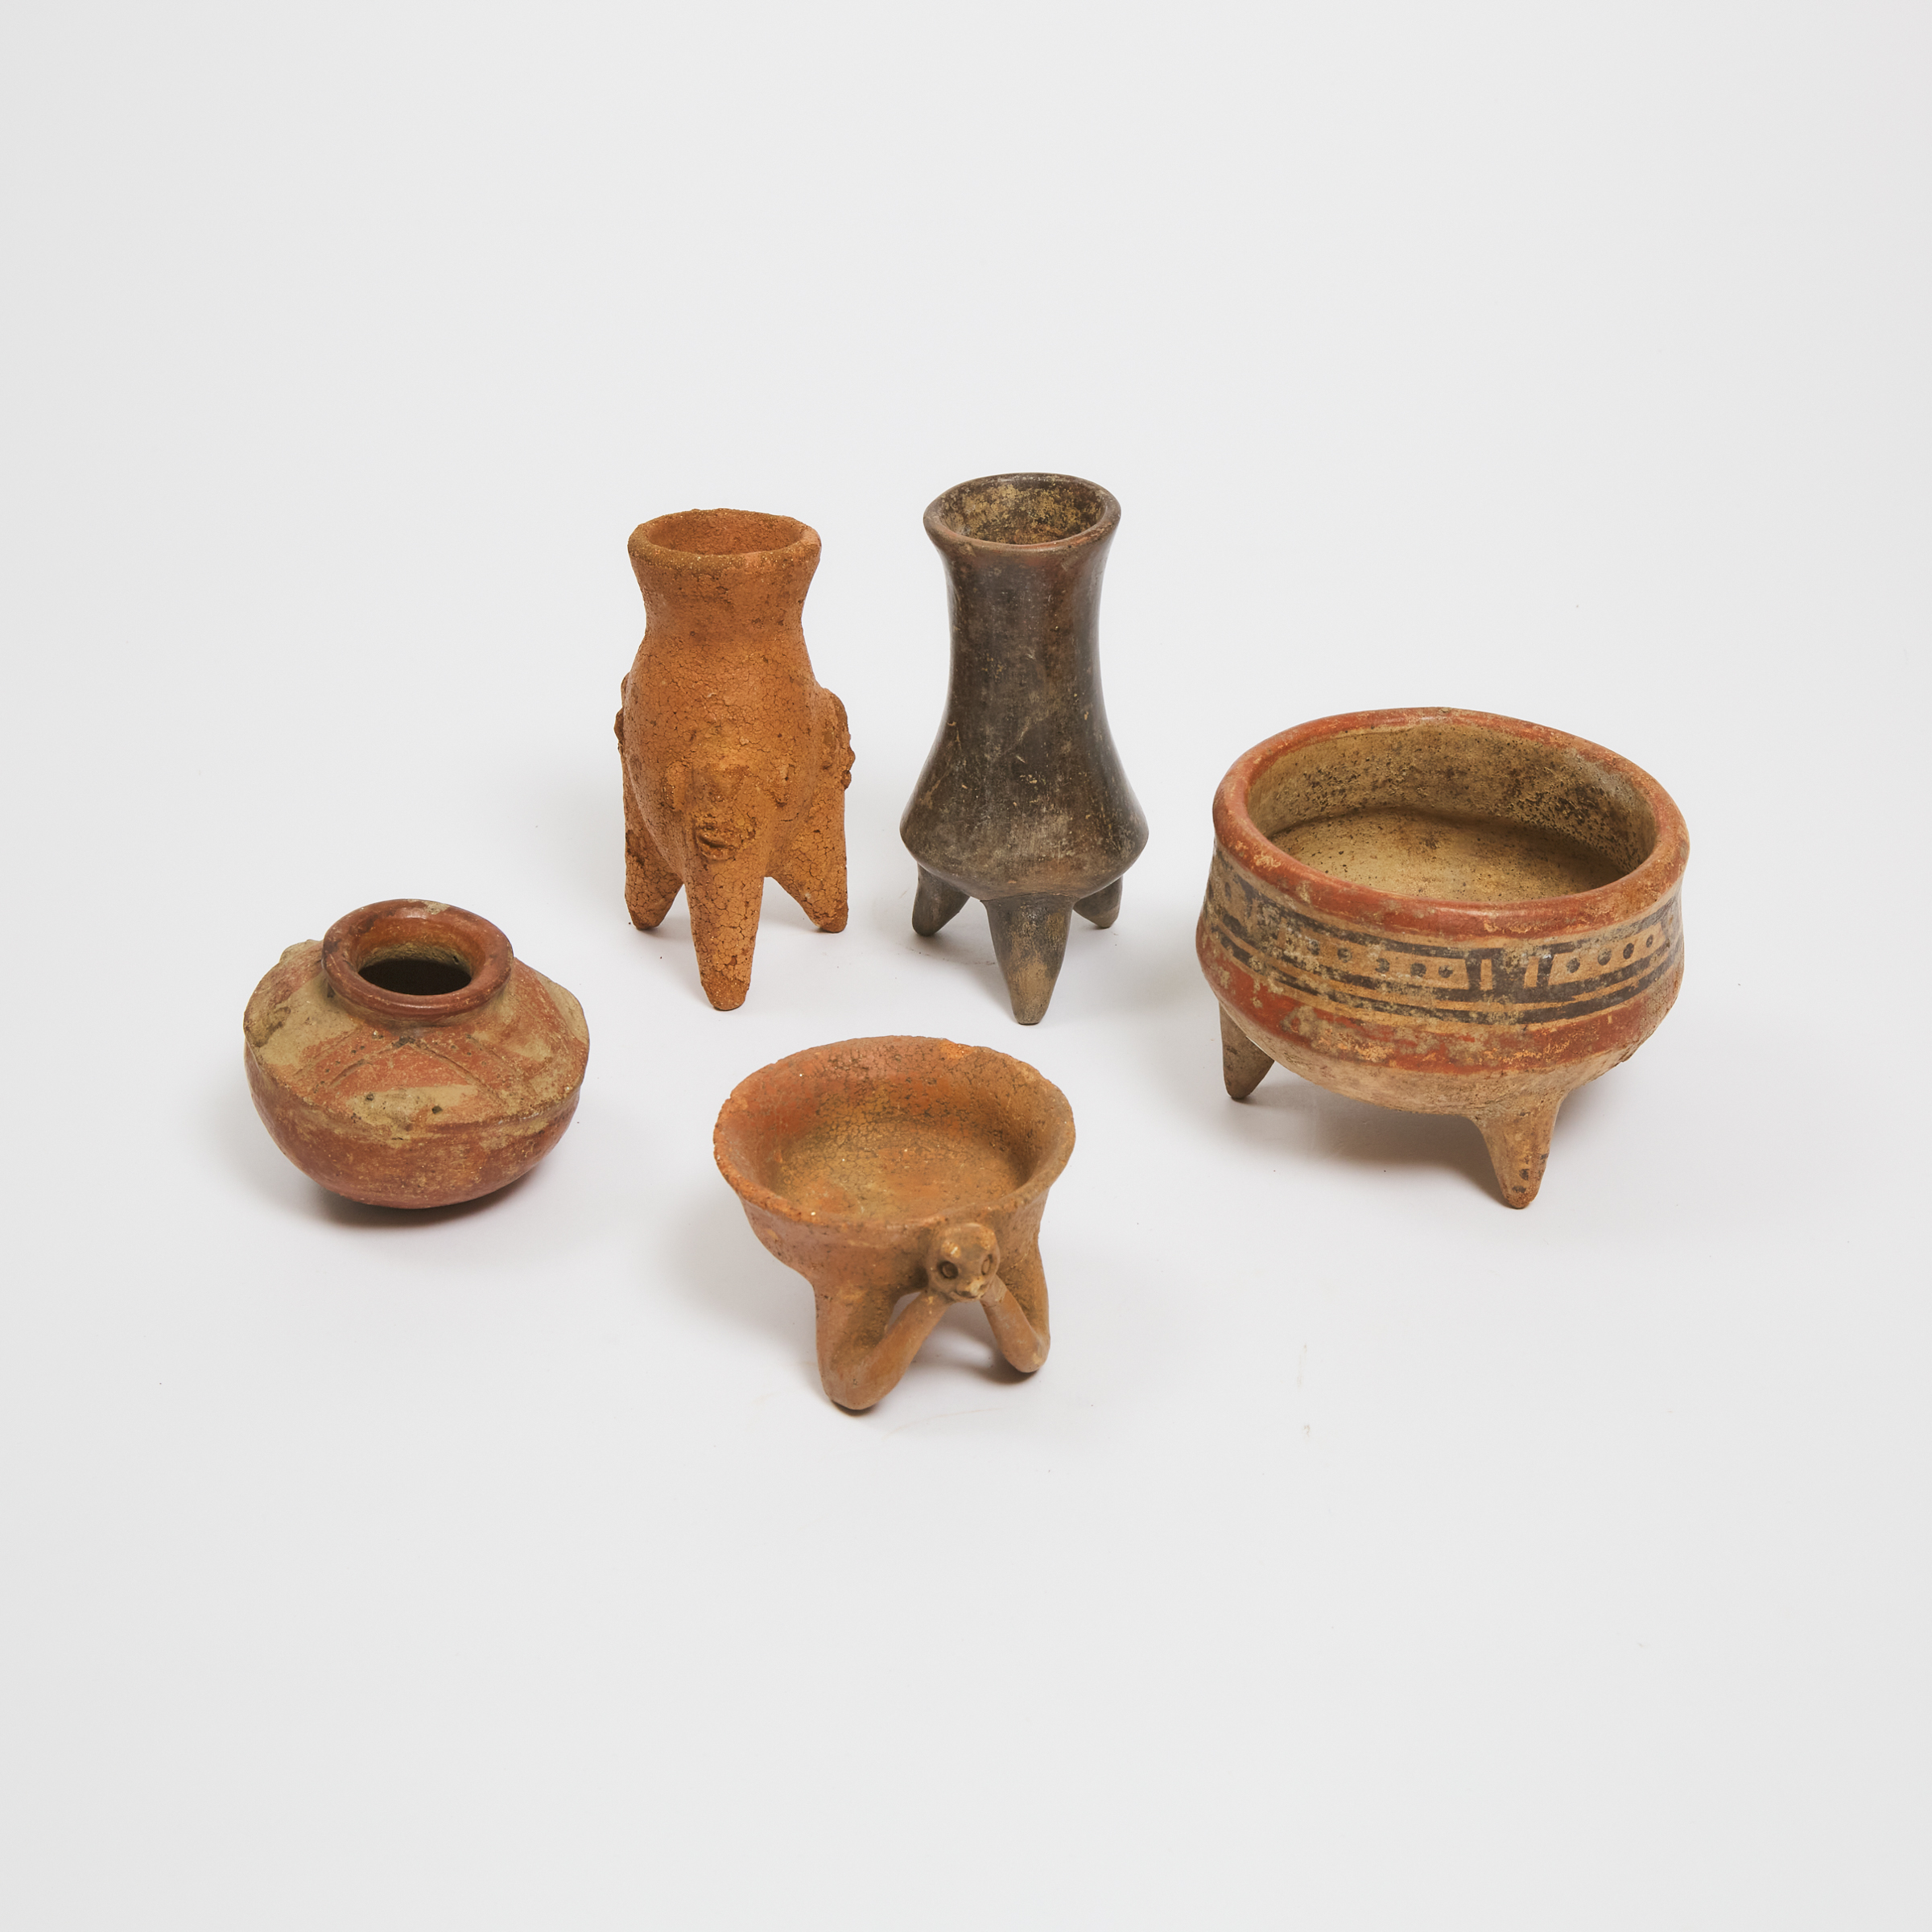 Five Costa Rican Pre-Columbian Pottery Vessels, 300 BC-1000 AD